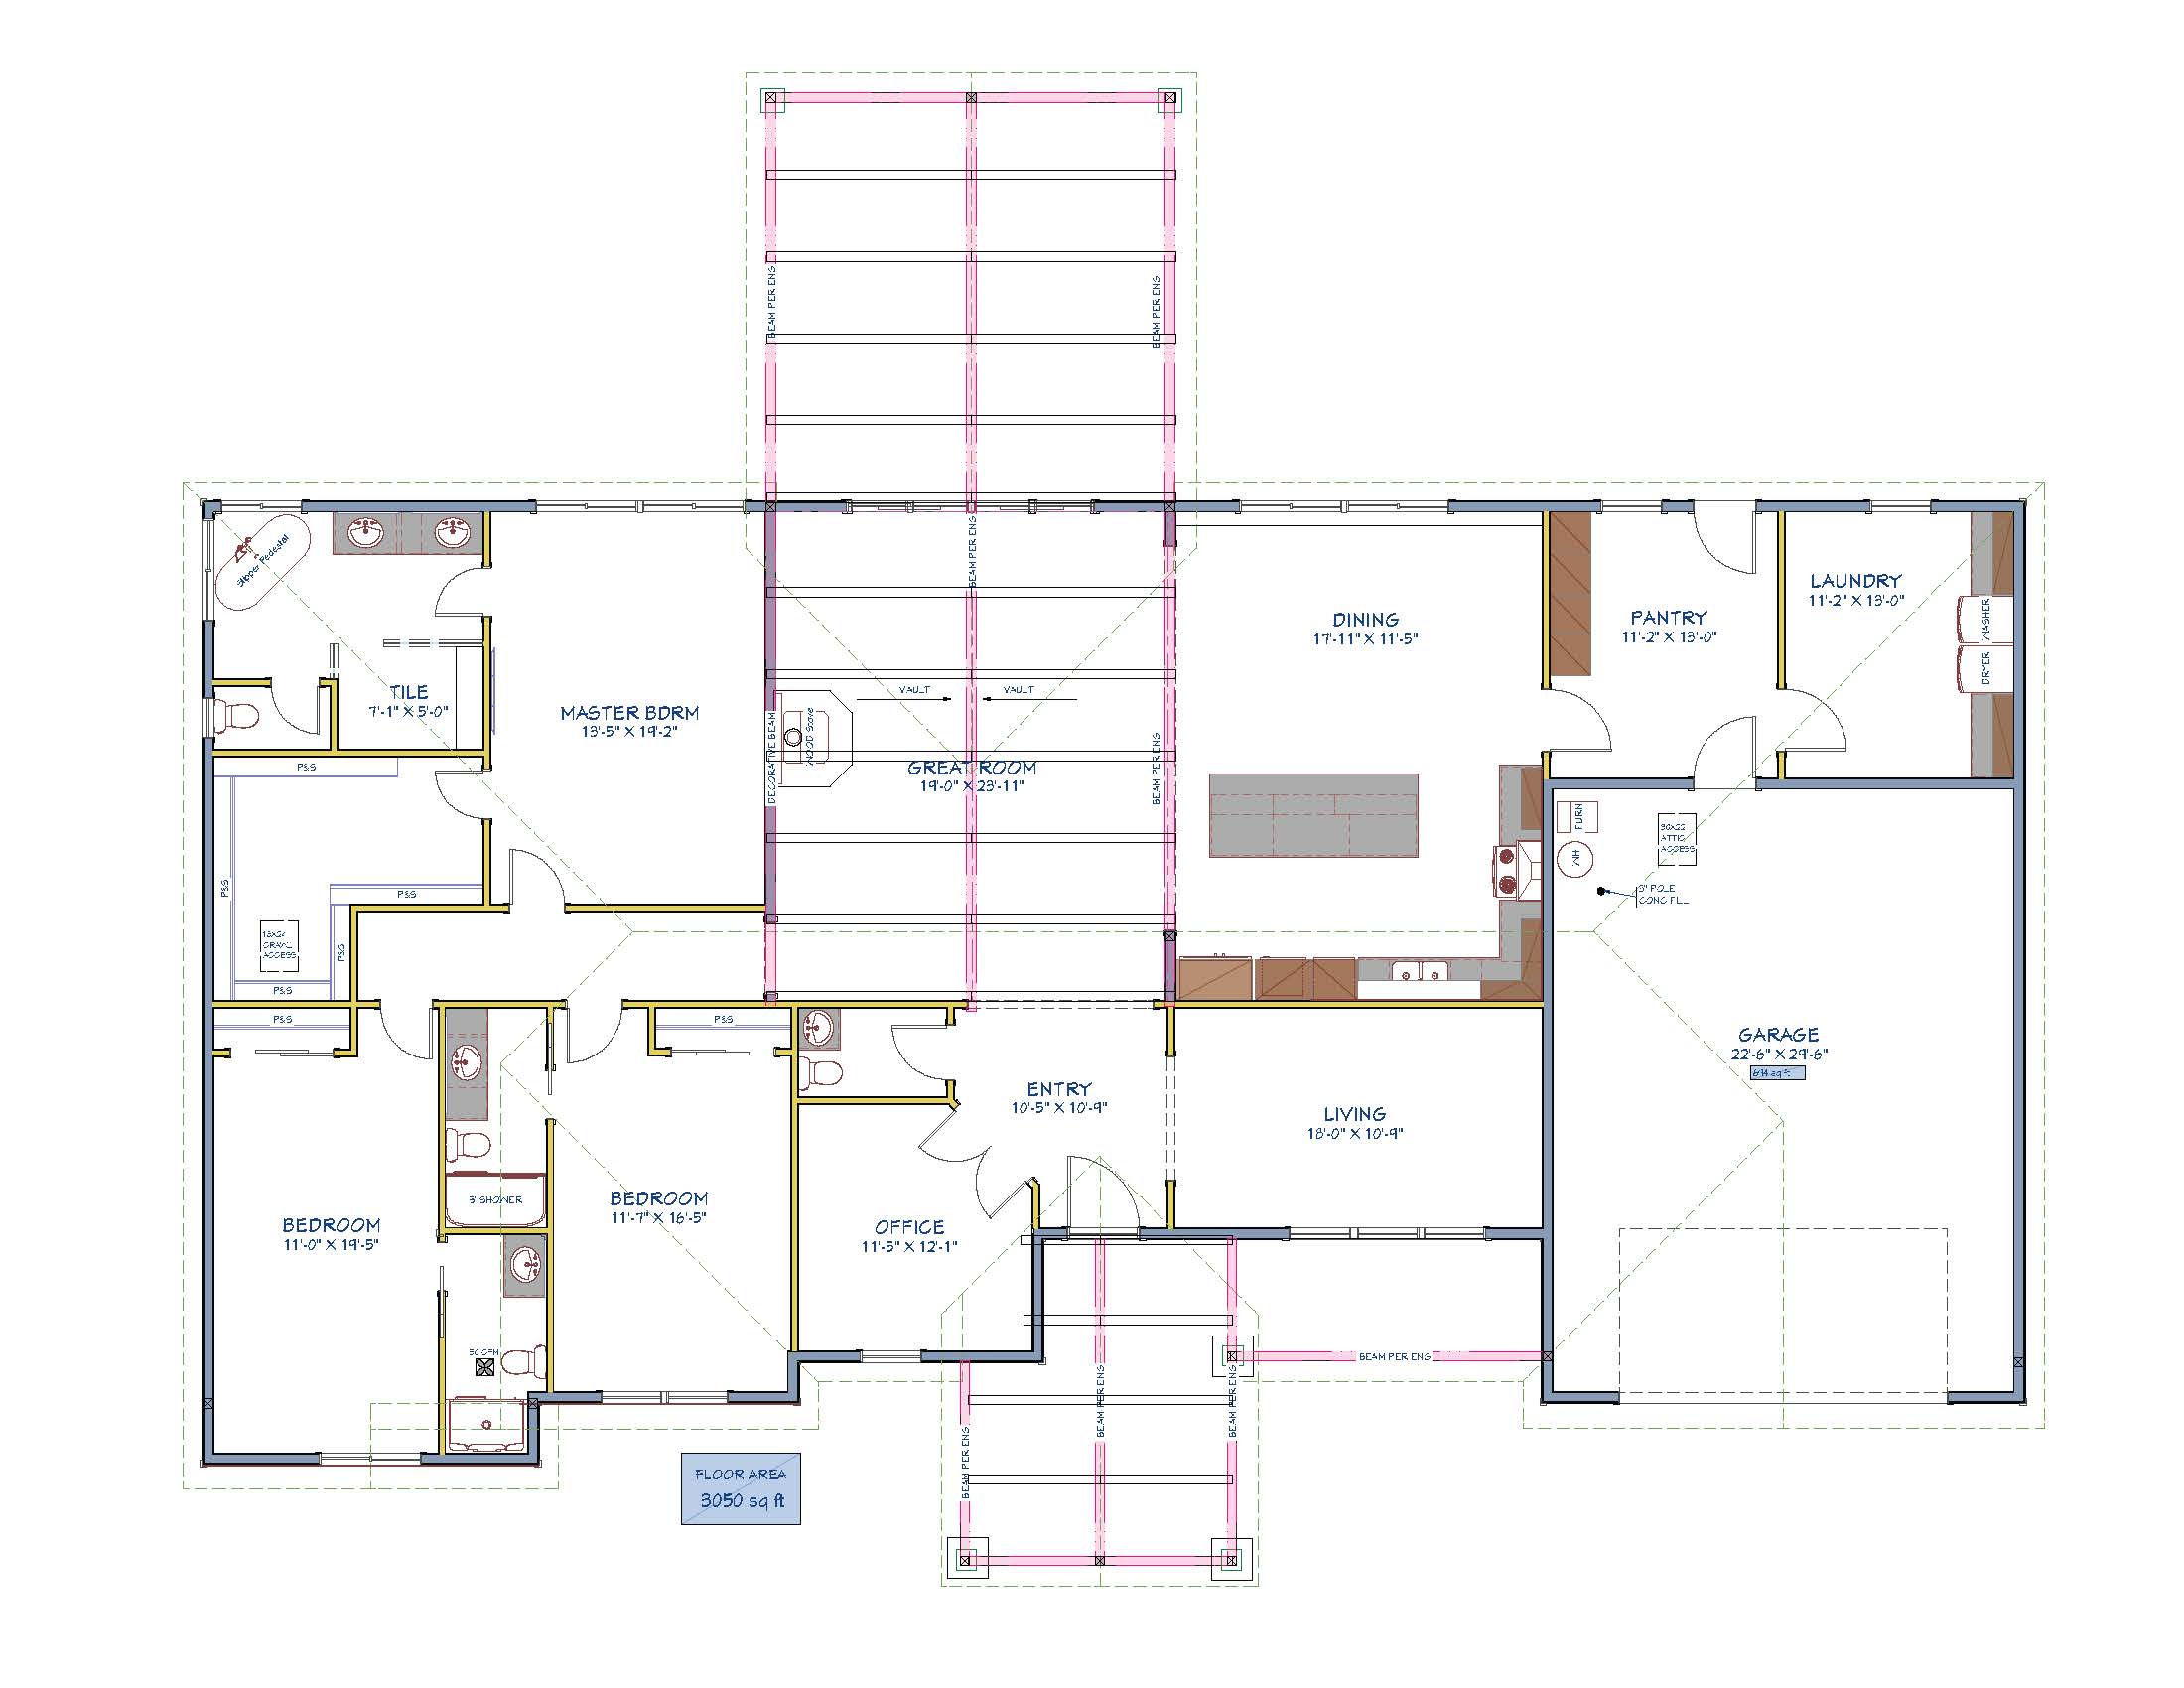 19-021 traditional floorplan